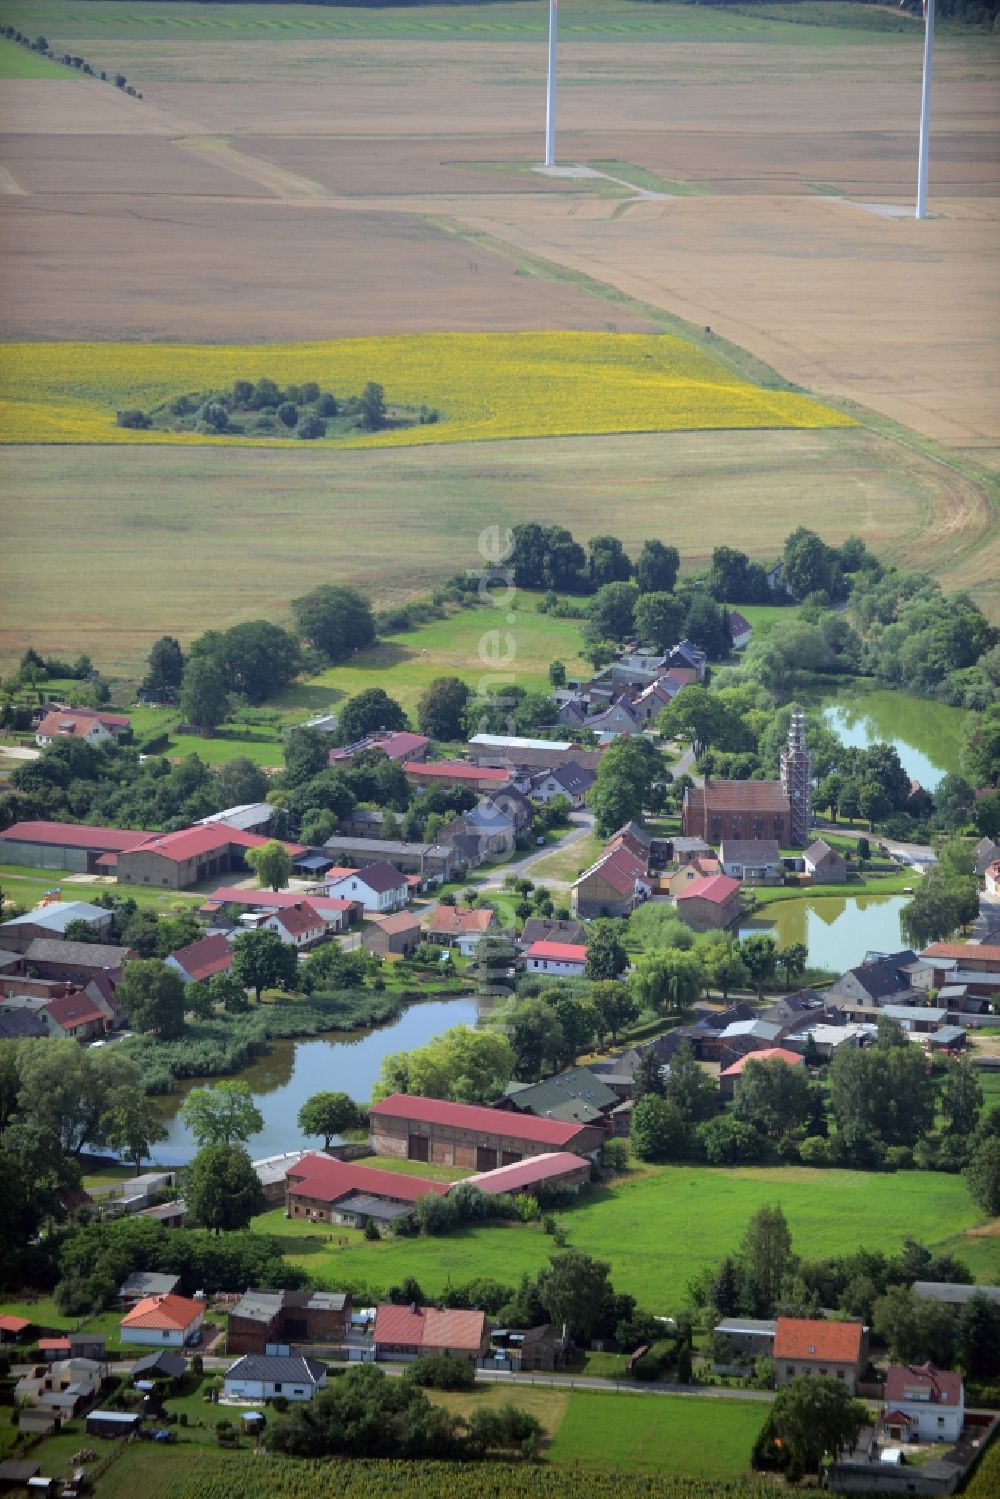 Luftaufnahme Beiersdorf-Freudenberg - Ortsteilansicht des Ortsteils Freudenberg in Beiersdorf-Freudenberg im Bundesland Brandenburg